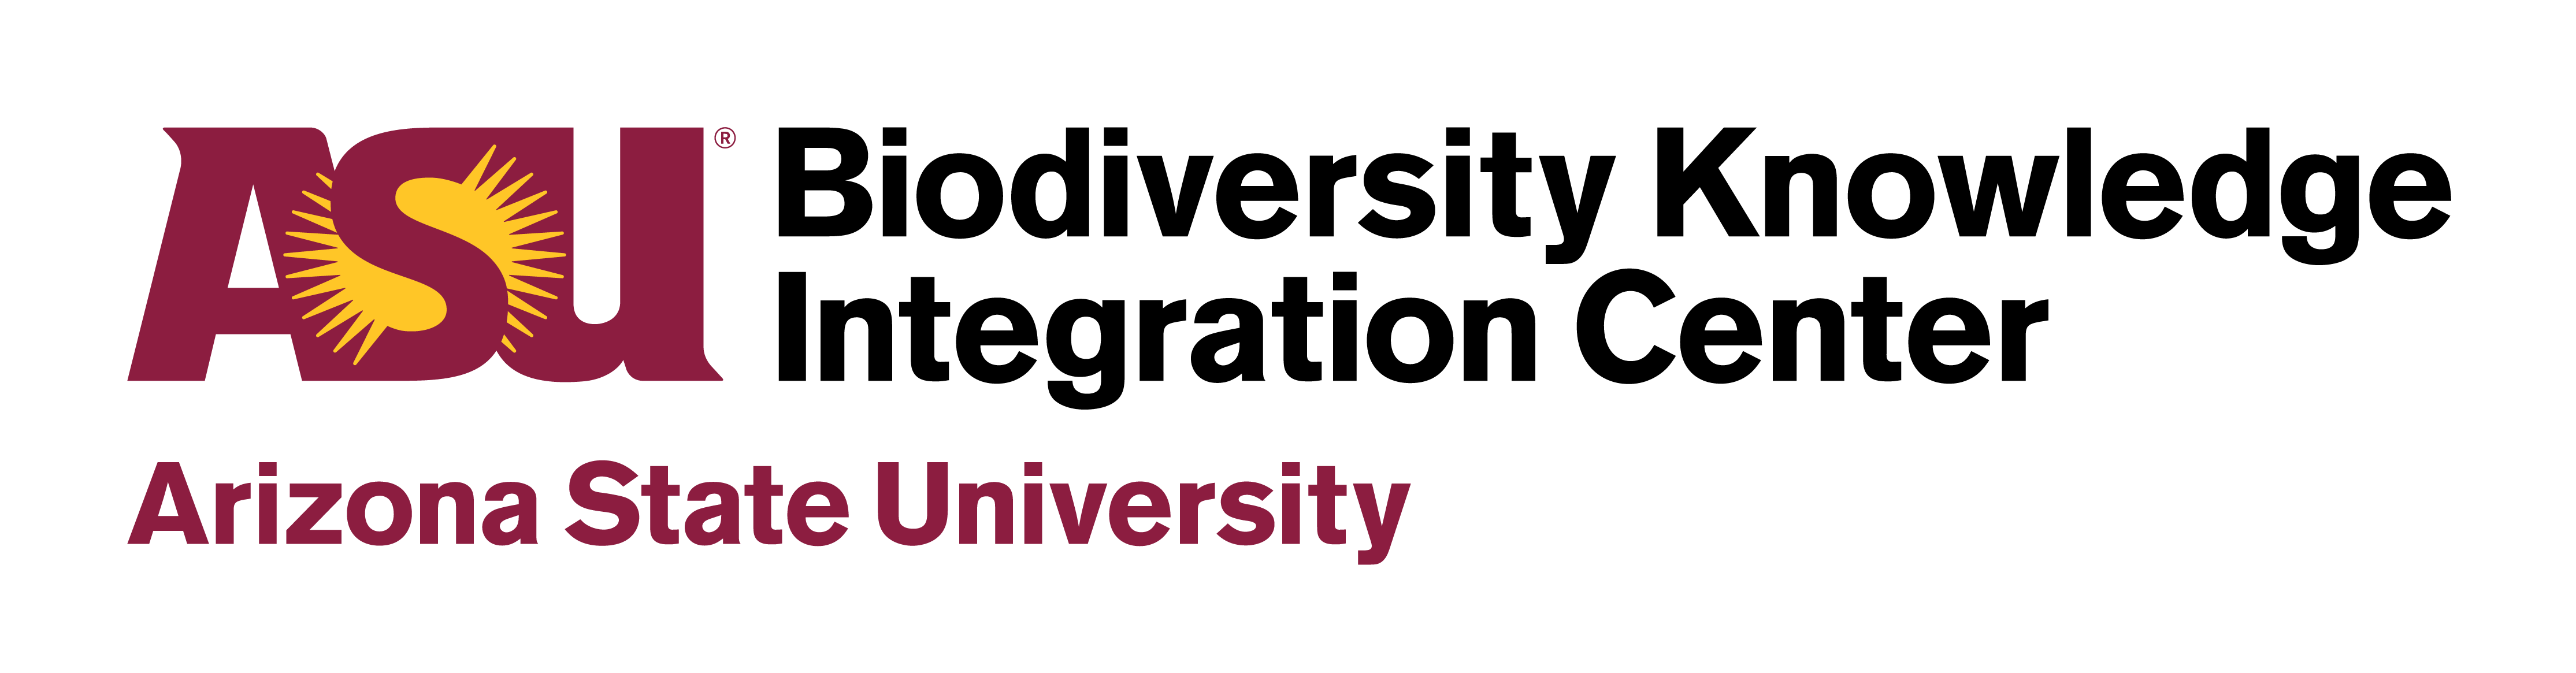 Arizona State University Biodiversity Knowledge Integration Center Logo